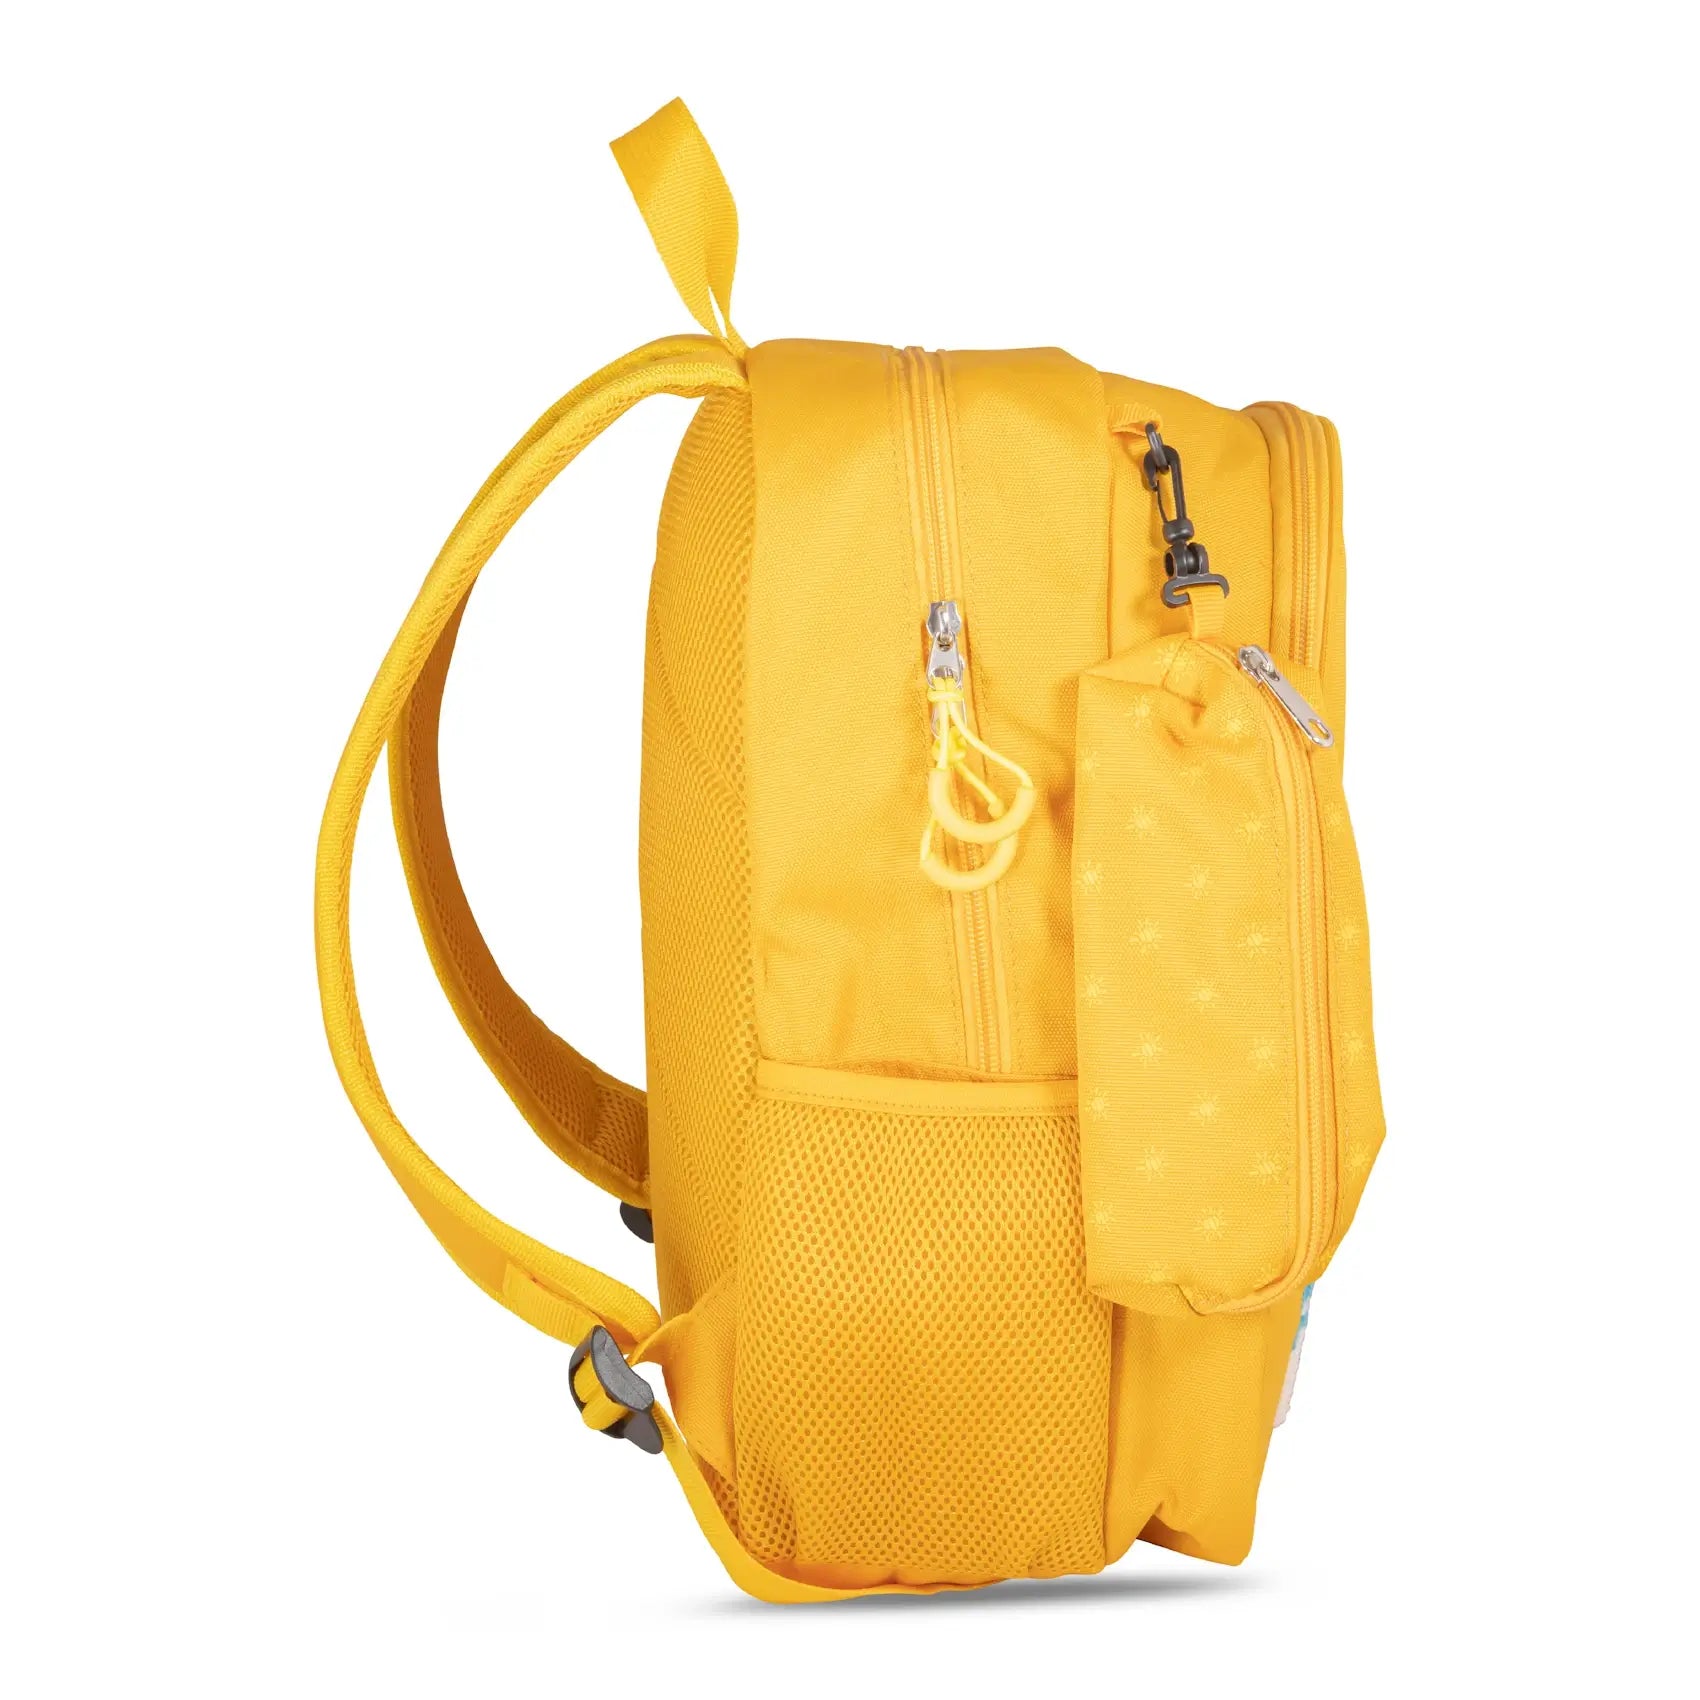 oloe-plush-character-backpack-ojo-orange-side-facing